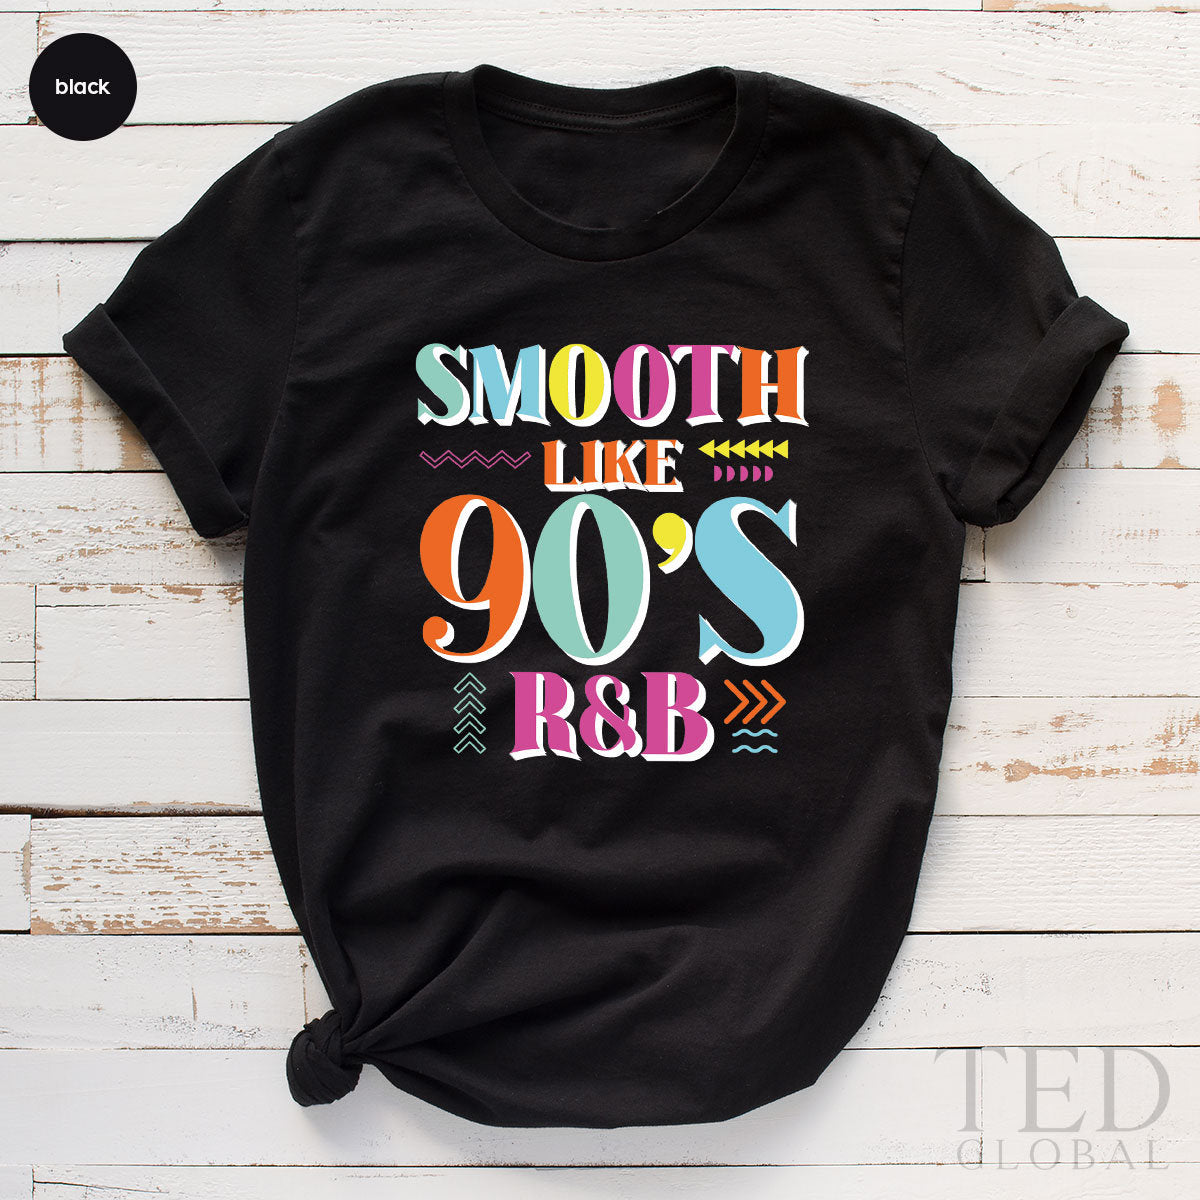 Cute 90's R&B T-Shirt, Vintage 80-90 T Shirt, 90s Music Shirts